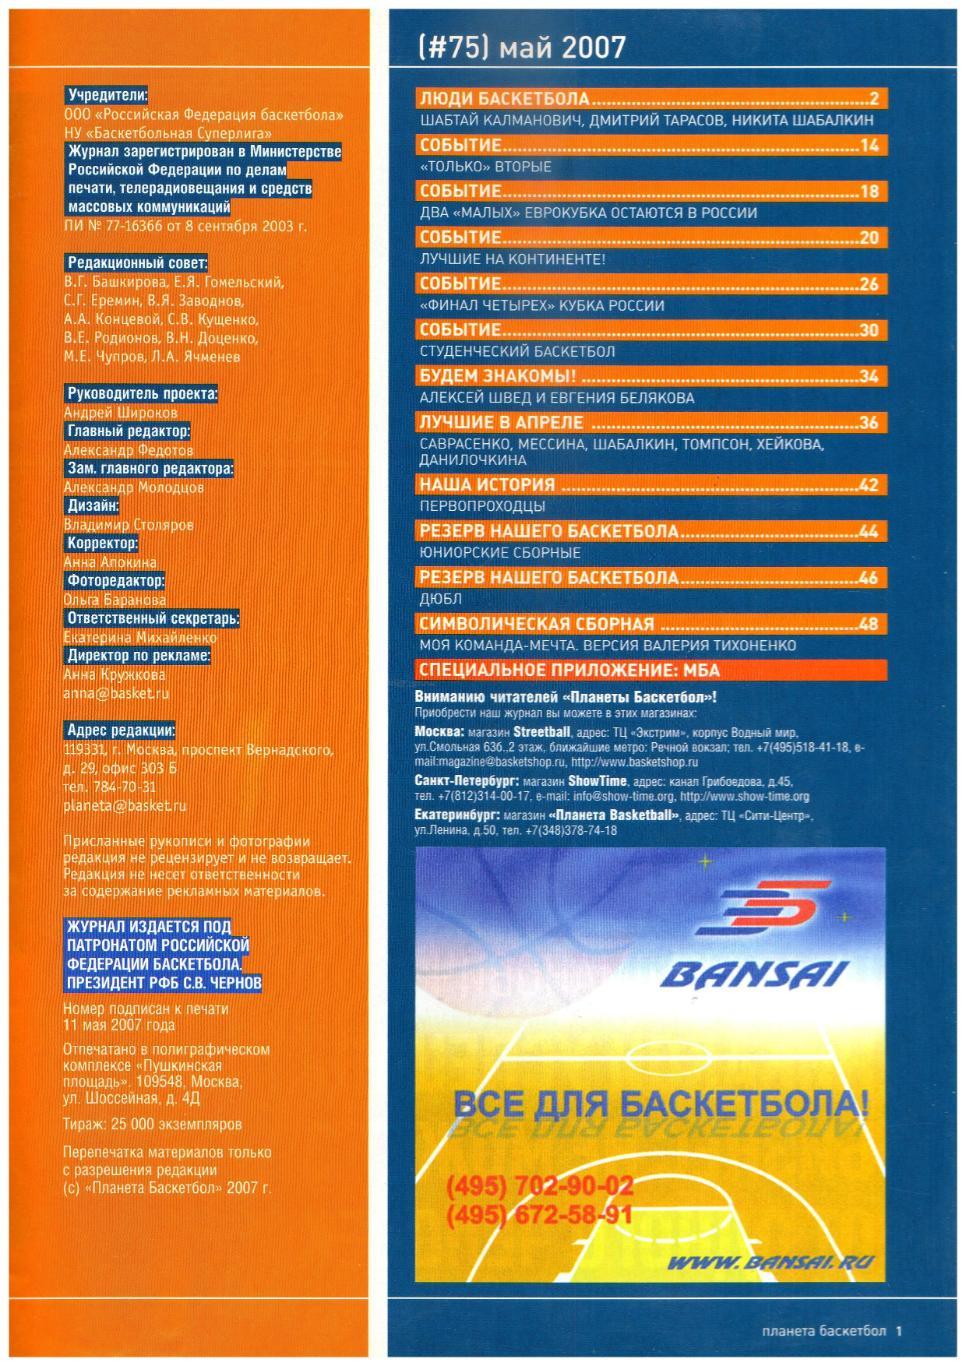 Планета Баскетбол 2007 Май Ш.Калманович Евролига Финал четырех А.Швед Н.Шабалкин 1